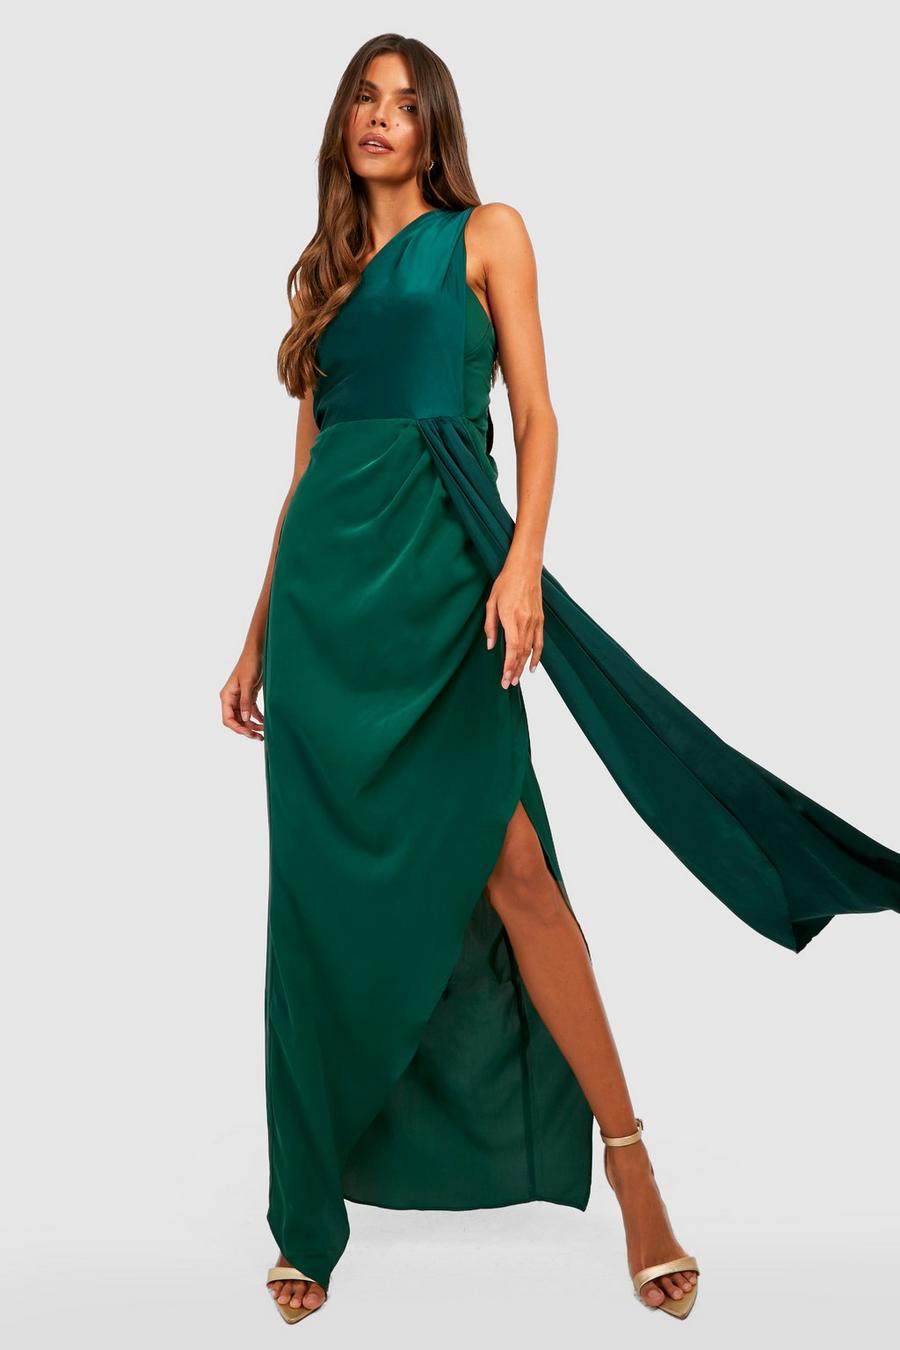 Emerald Green Satin One Shoulder Split Long Dress - VQ